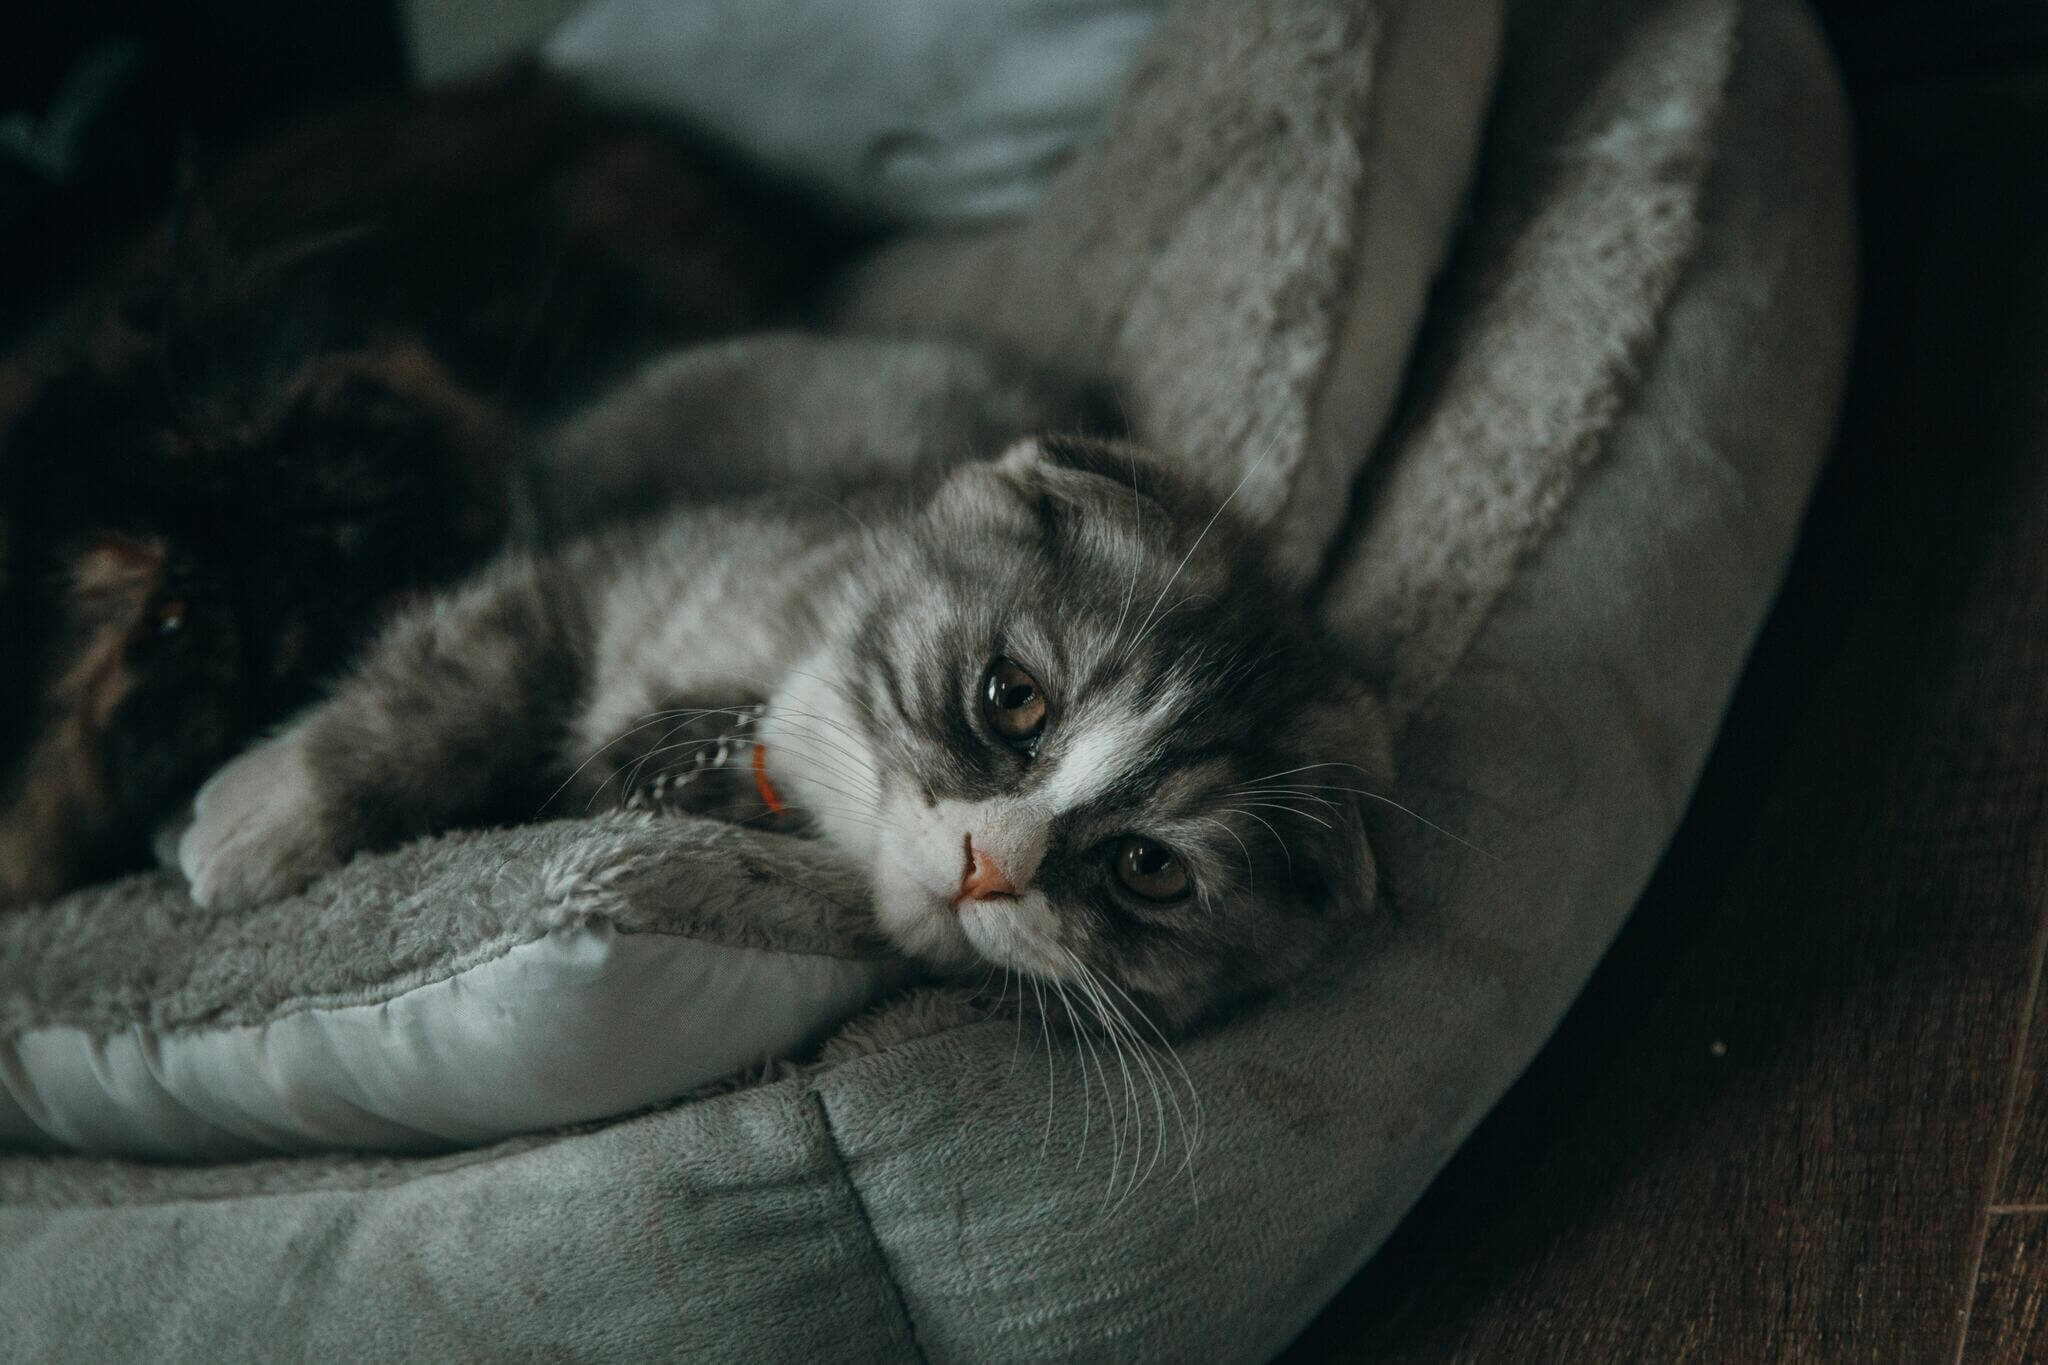 A cat on a sofa.